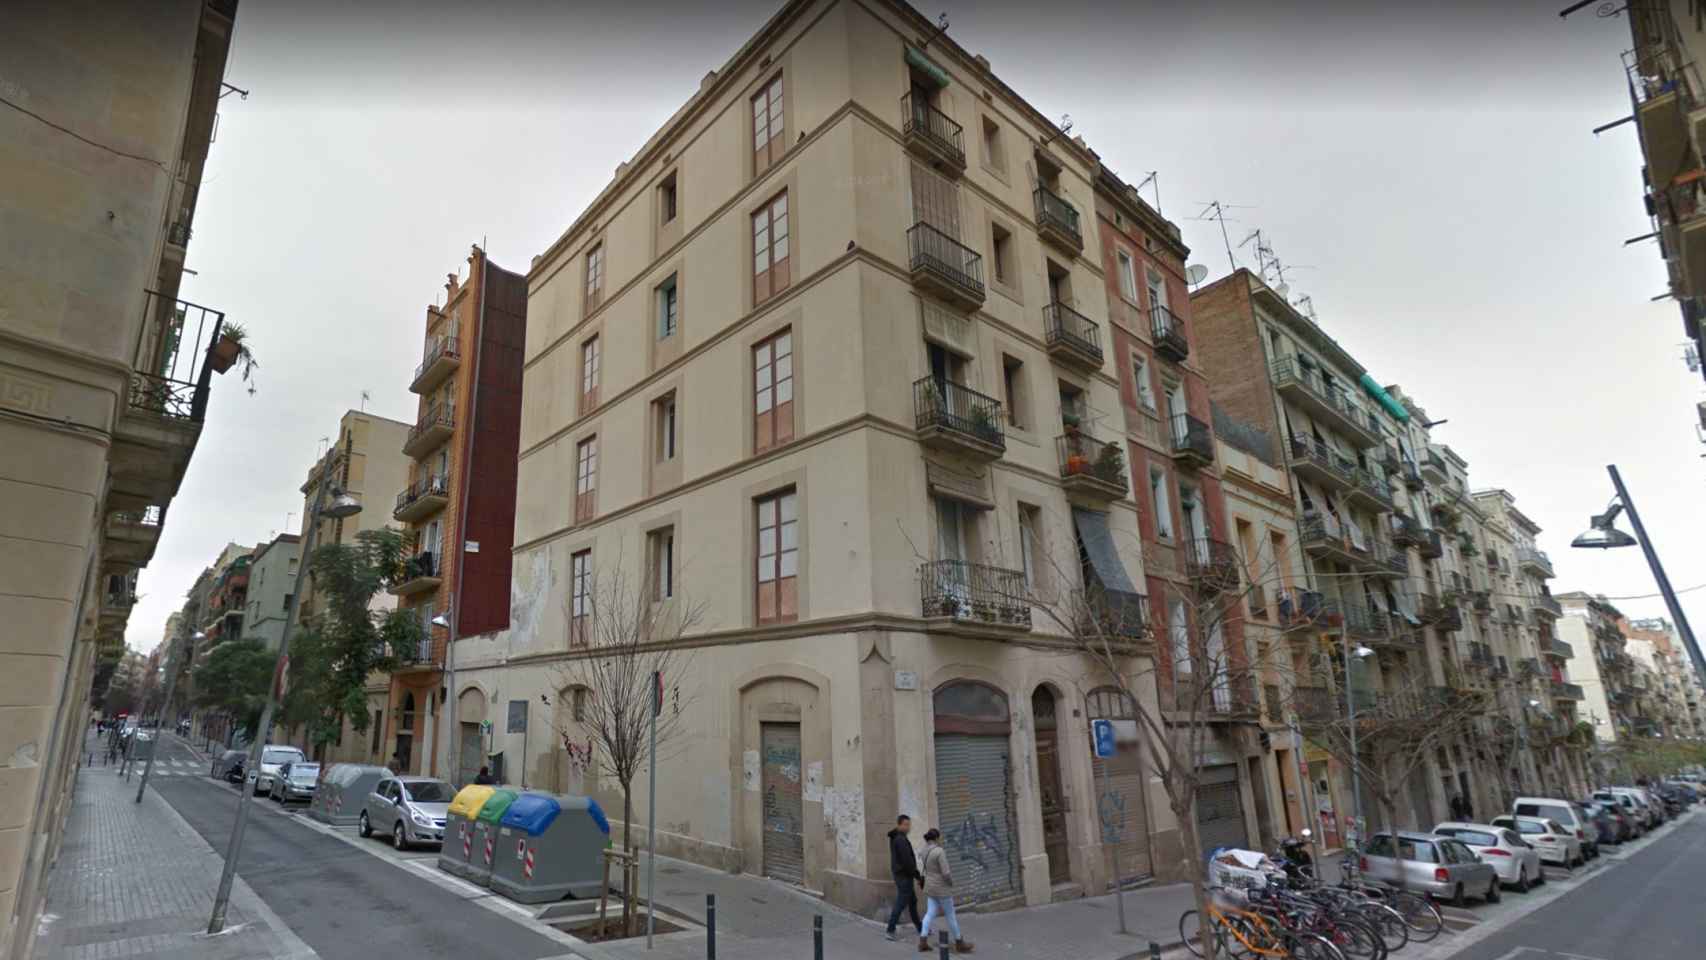 La calle Salvà en Barcelona, donde agentes de paisano han detenido a tres ladrones / GOOGLE MAPS